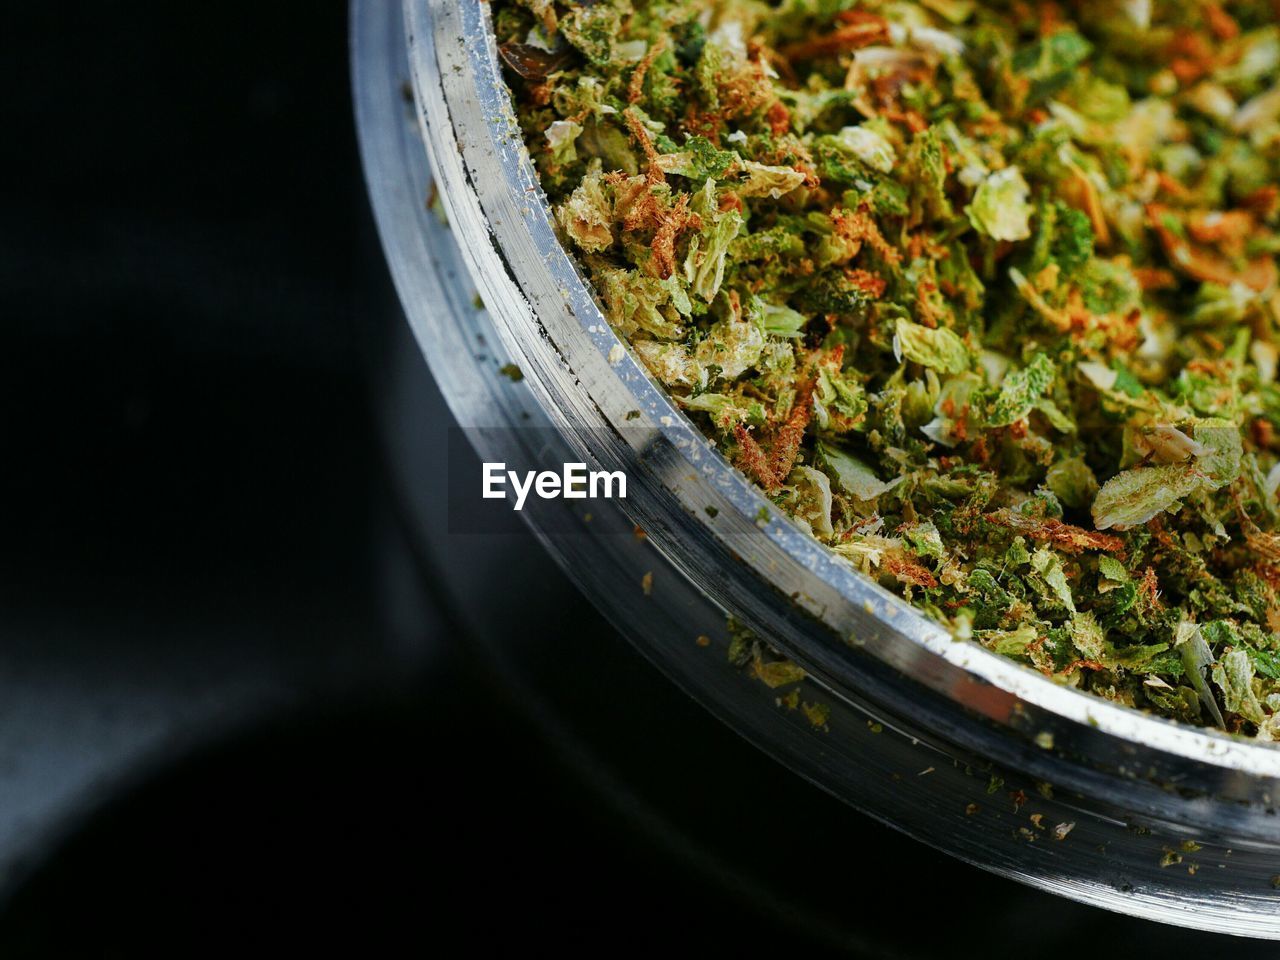 Close-up of marijuana on table